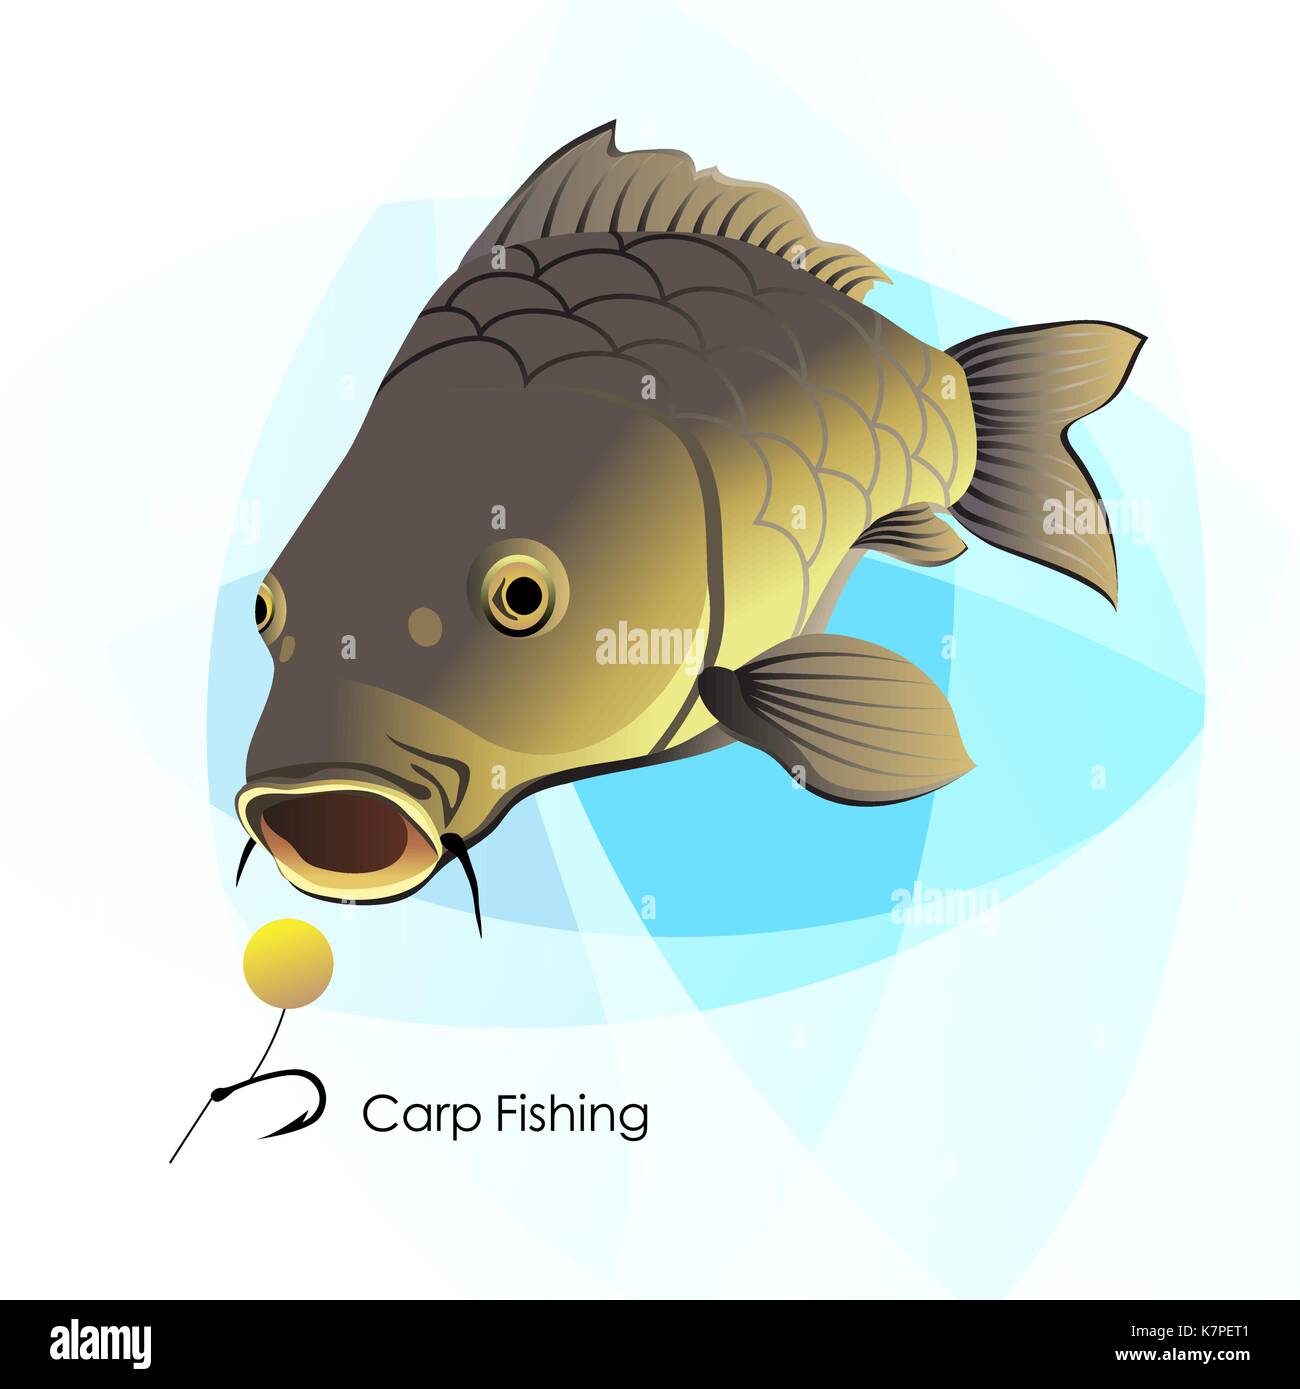 Carp Fishing, vector illustration Stock Vector